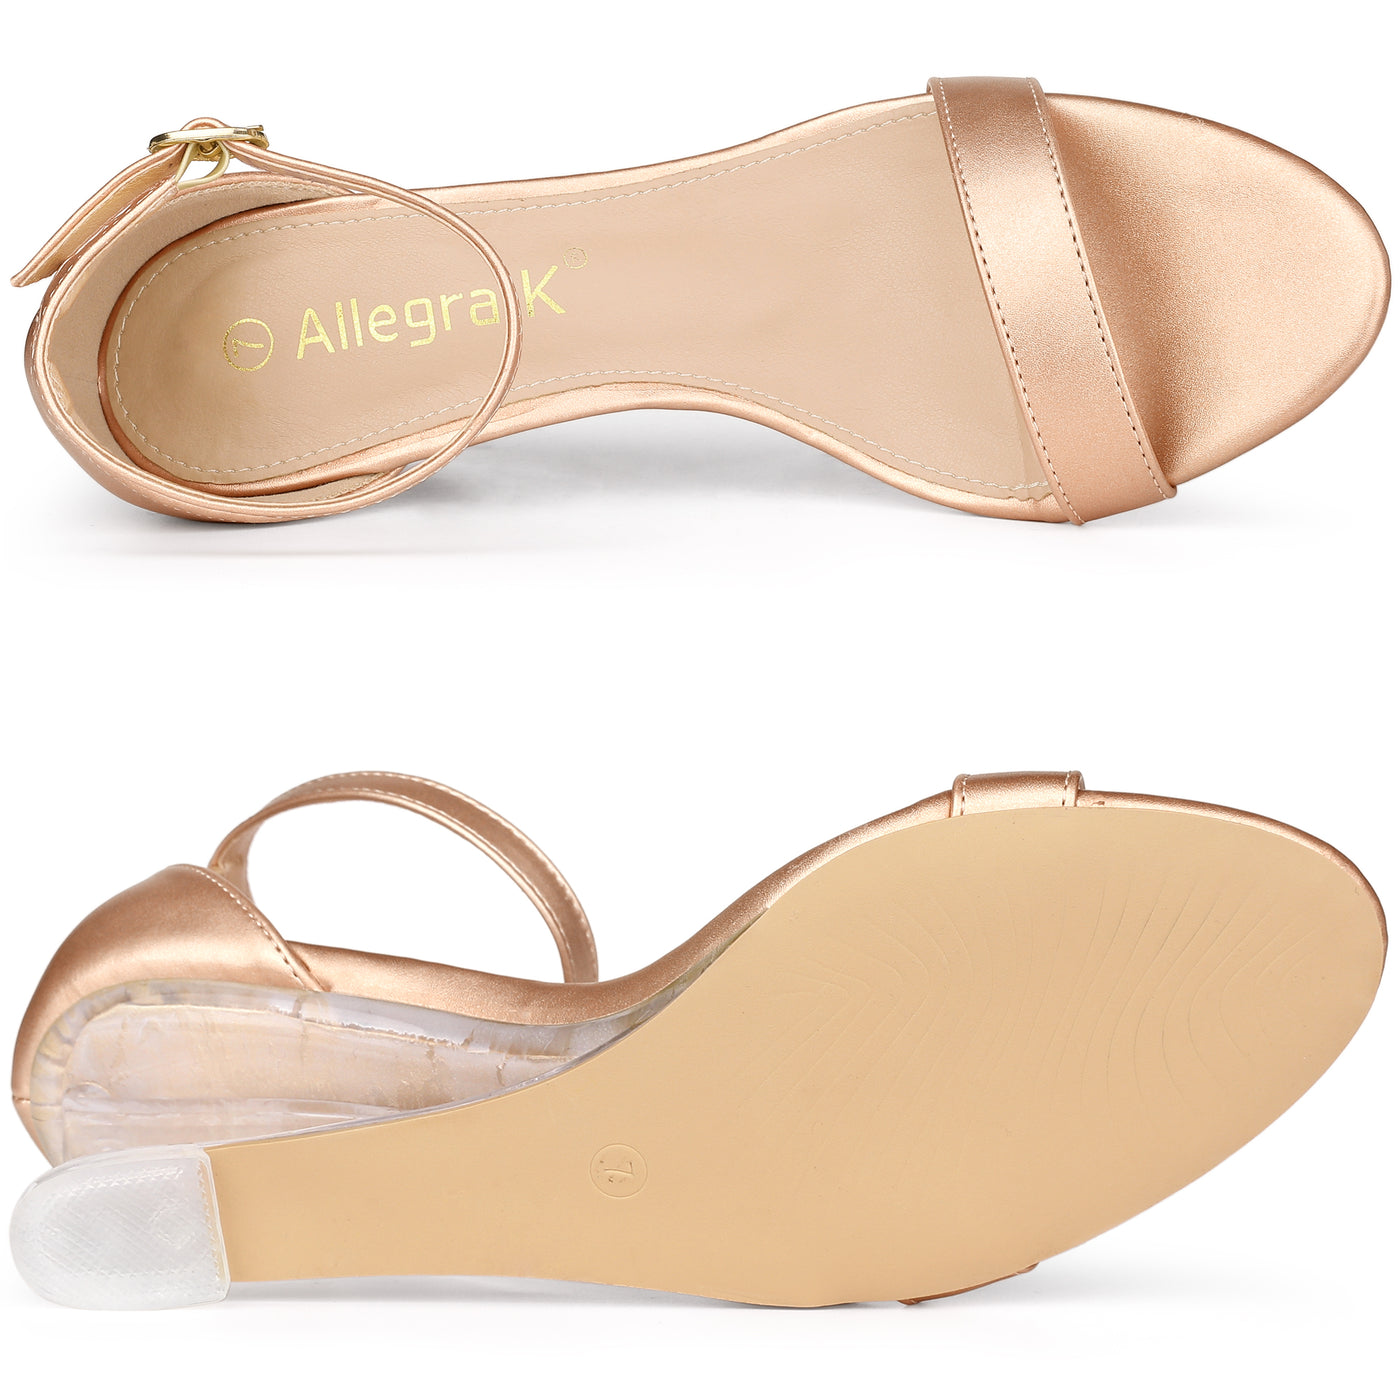 Allegra K Women's Clear Low Wedge Ankle Strap Heels Wedges Sandals